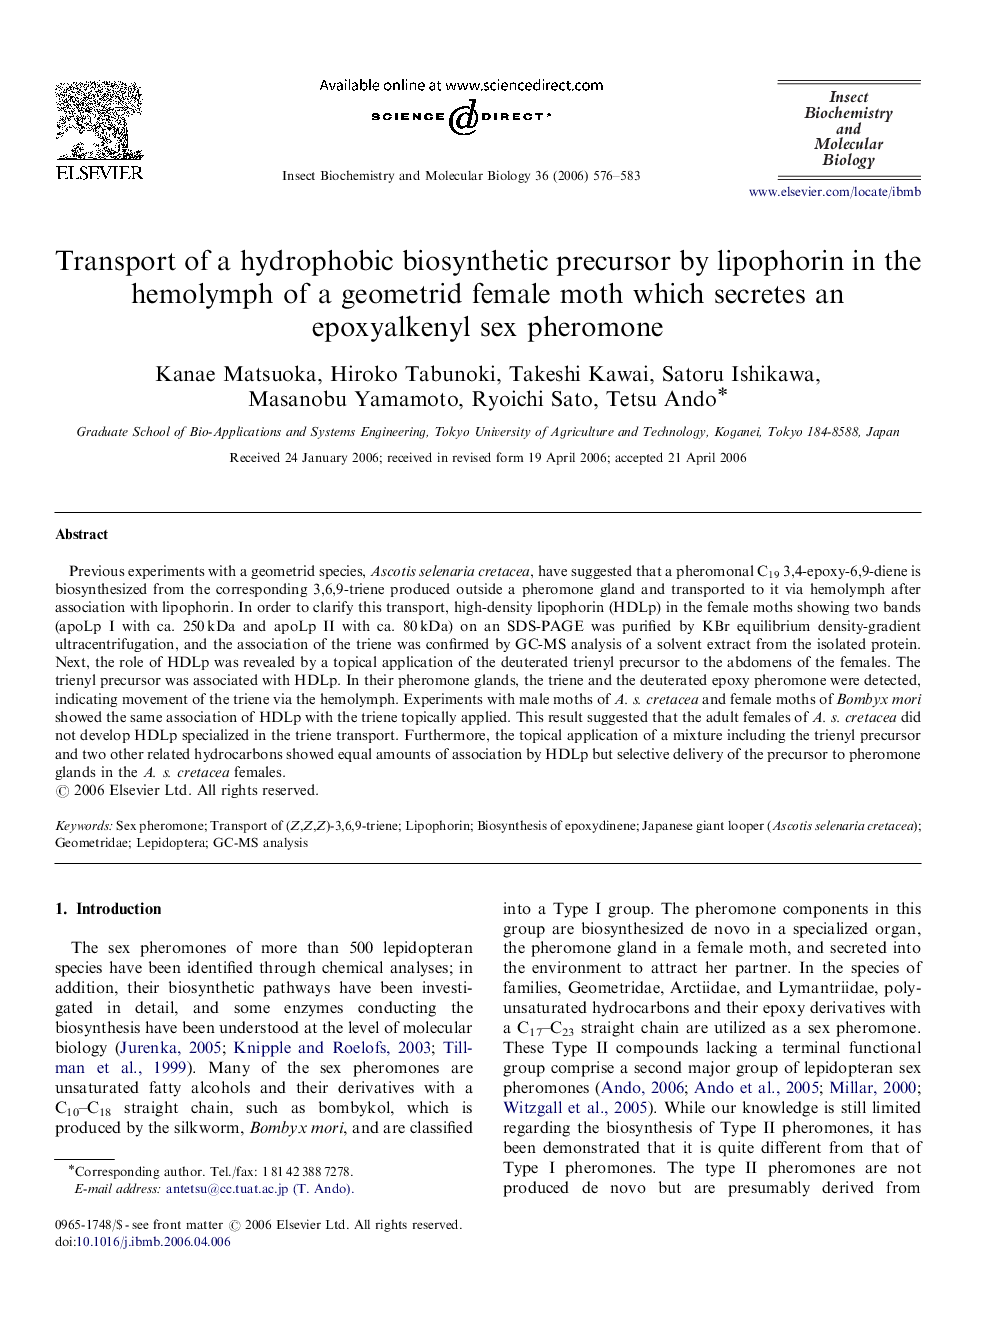 Transport of a hydrophobic biosynthetic precursor by lipophorin in the hemolymph of a geometrid female moth which secretes an epoxyalkenyl sex pheromone